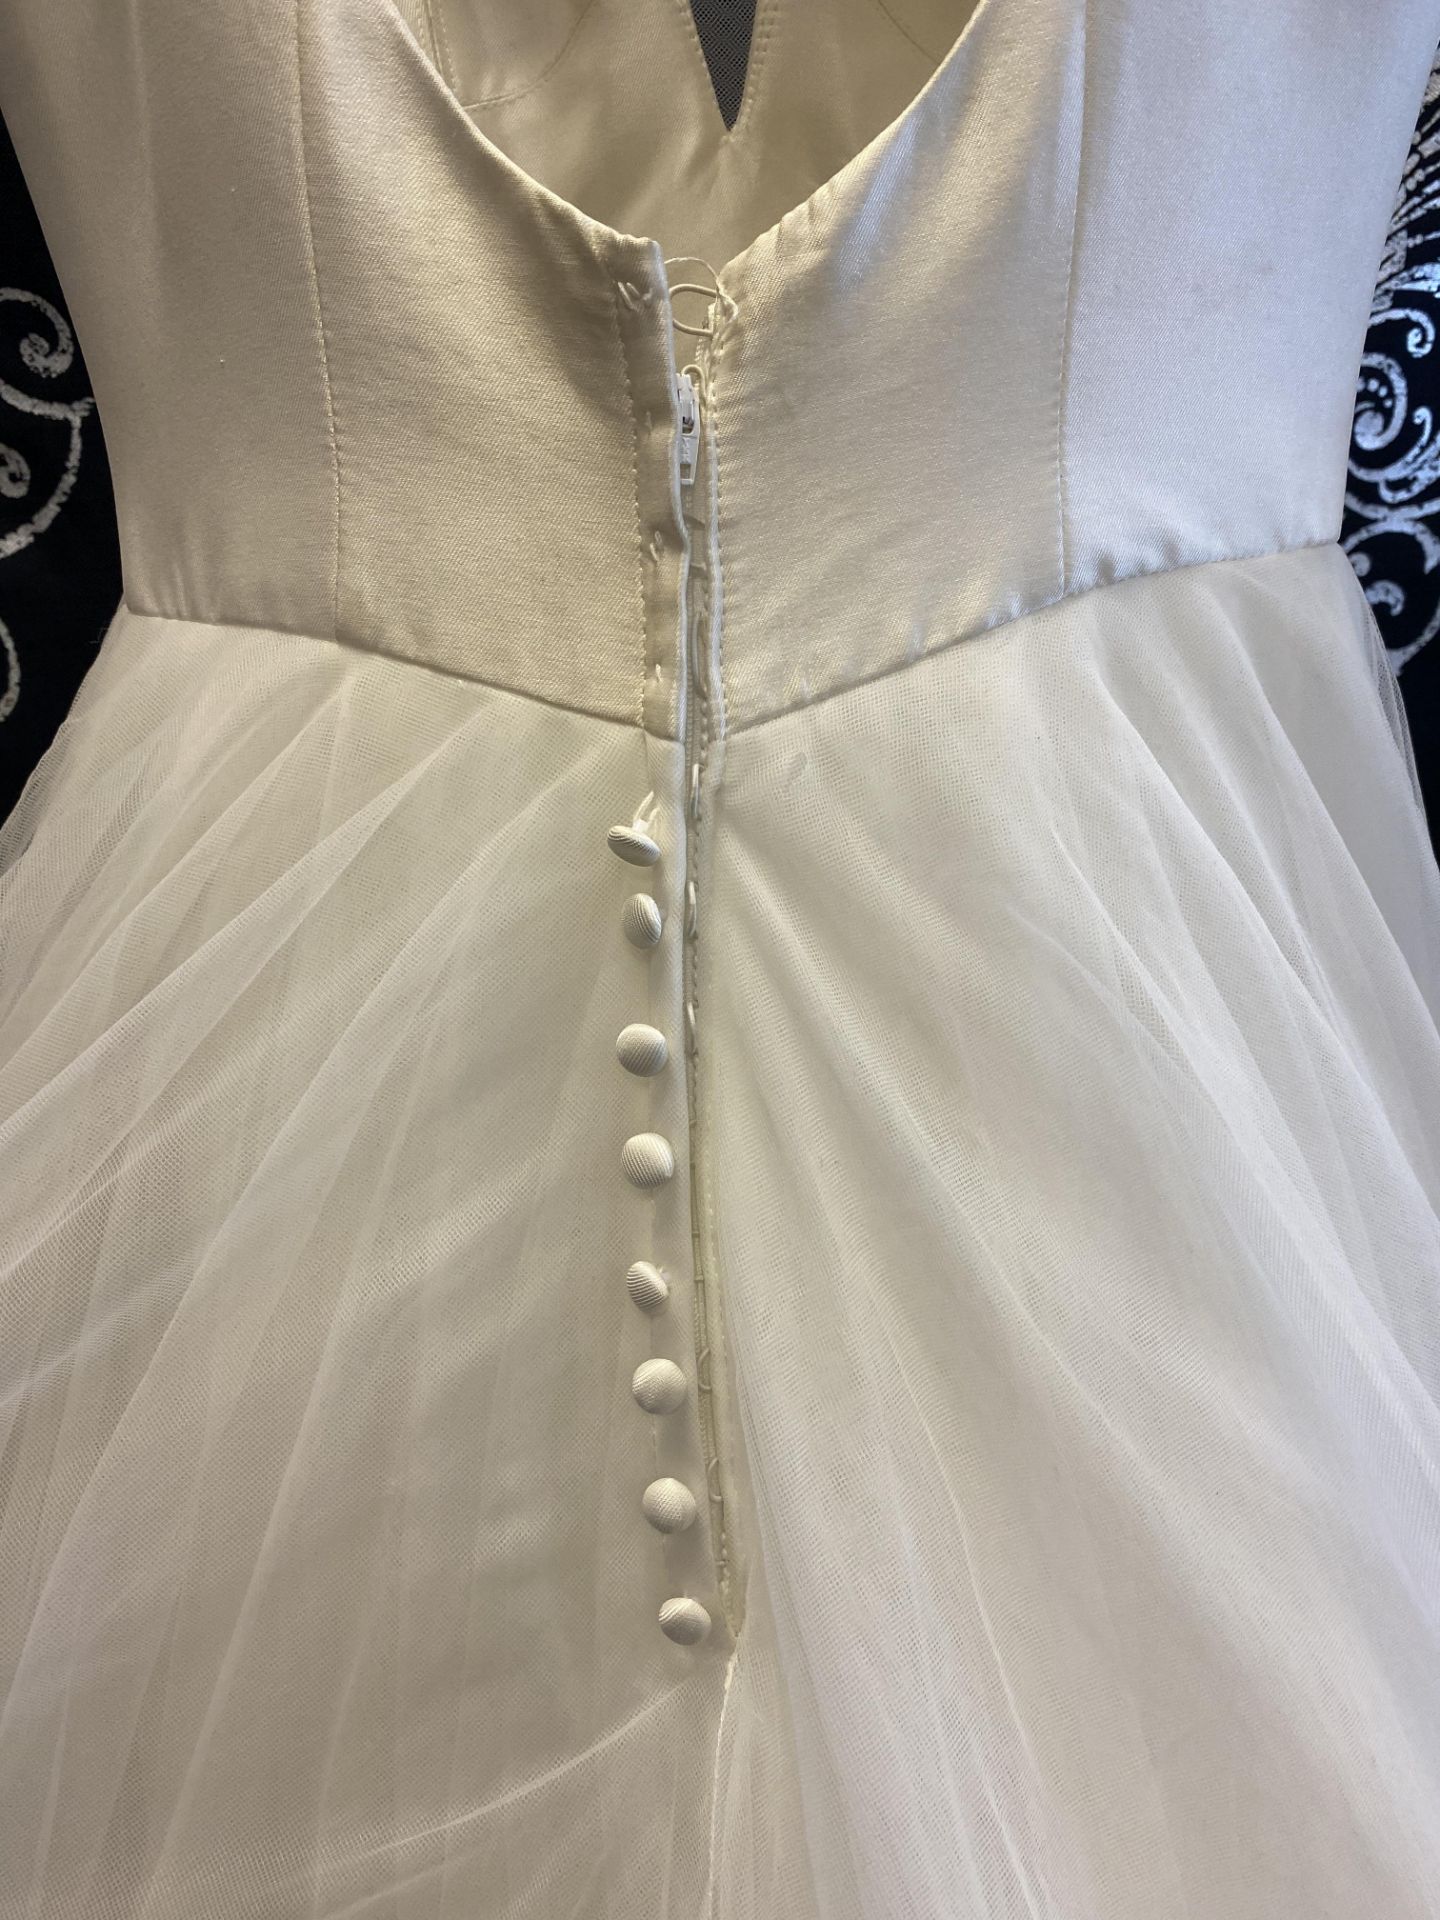 1 x ALLURE '9705' Stunning Chiffon Sculpted Skirted Designer Wedding Dress RRP £2,100 UK12 - Image 7 of 9